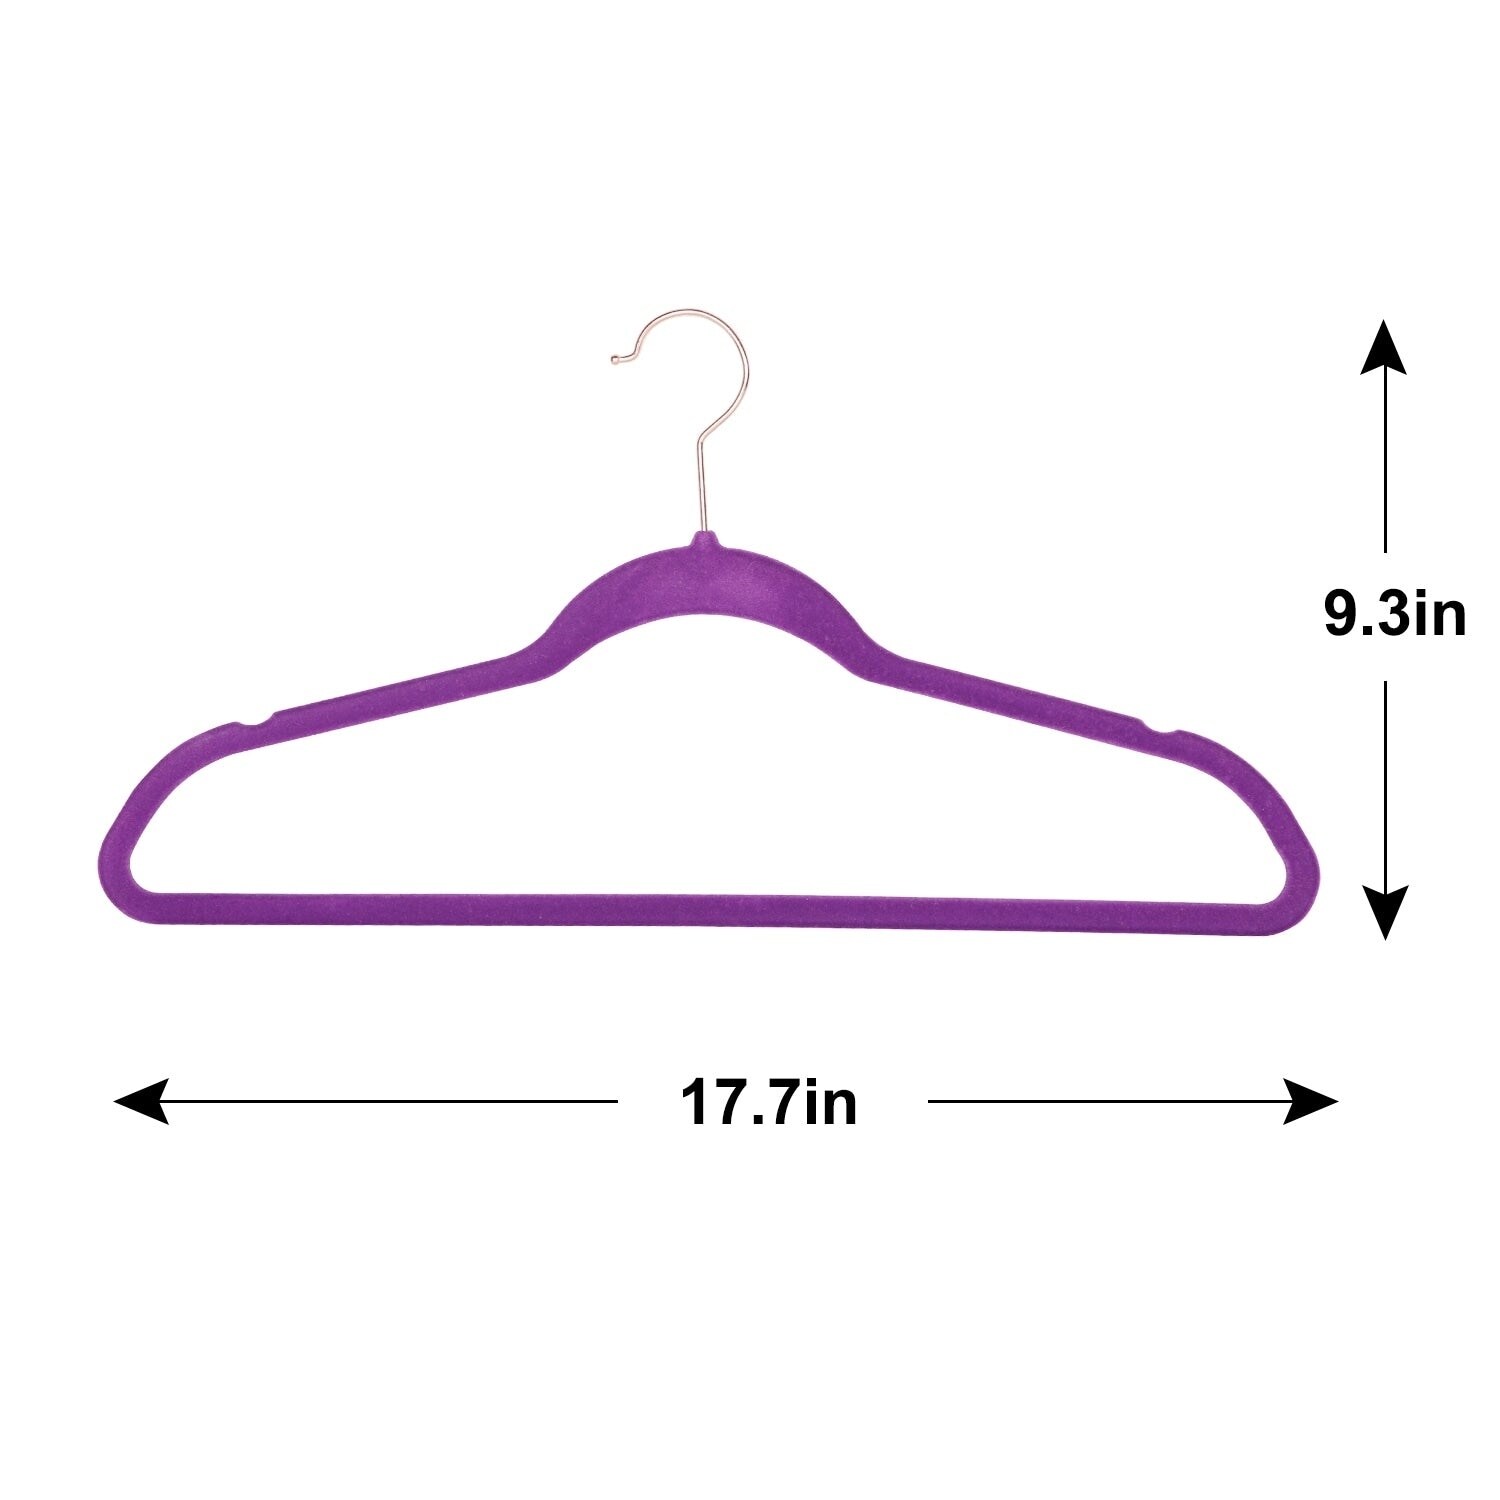 VECELO Premium Velvet Hangers/Suit Hangers Heavy Duty(50 Pack) - Non Slip  &Ultra Thin Space-Saving Clothes Hangers with 6 Finger Clips & 1 Tie Rack  Excellent for Men and Women(Black) 